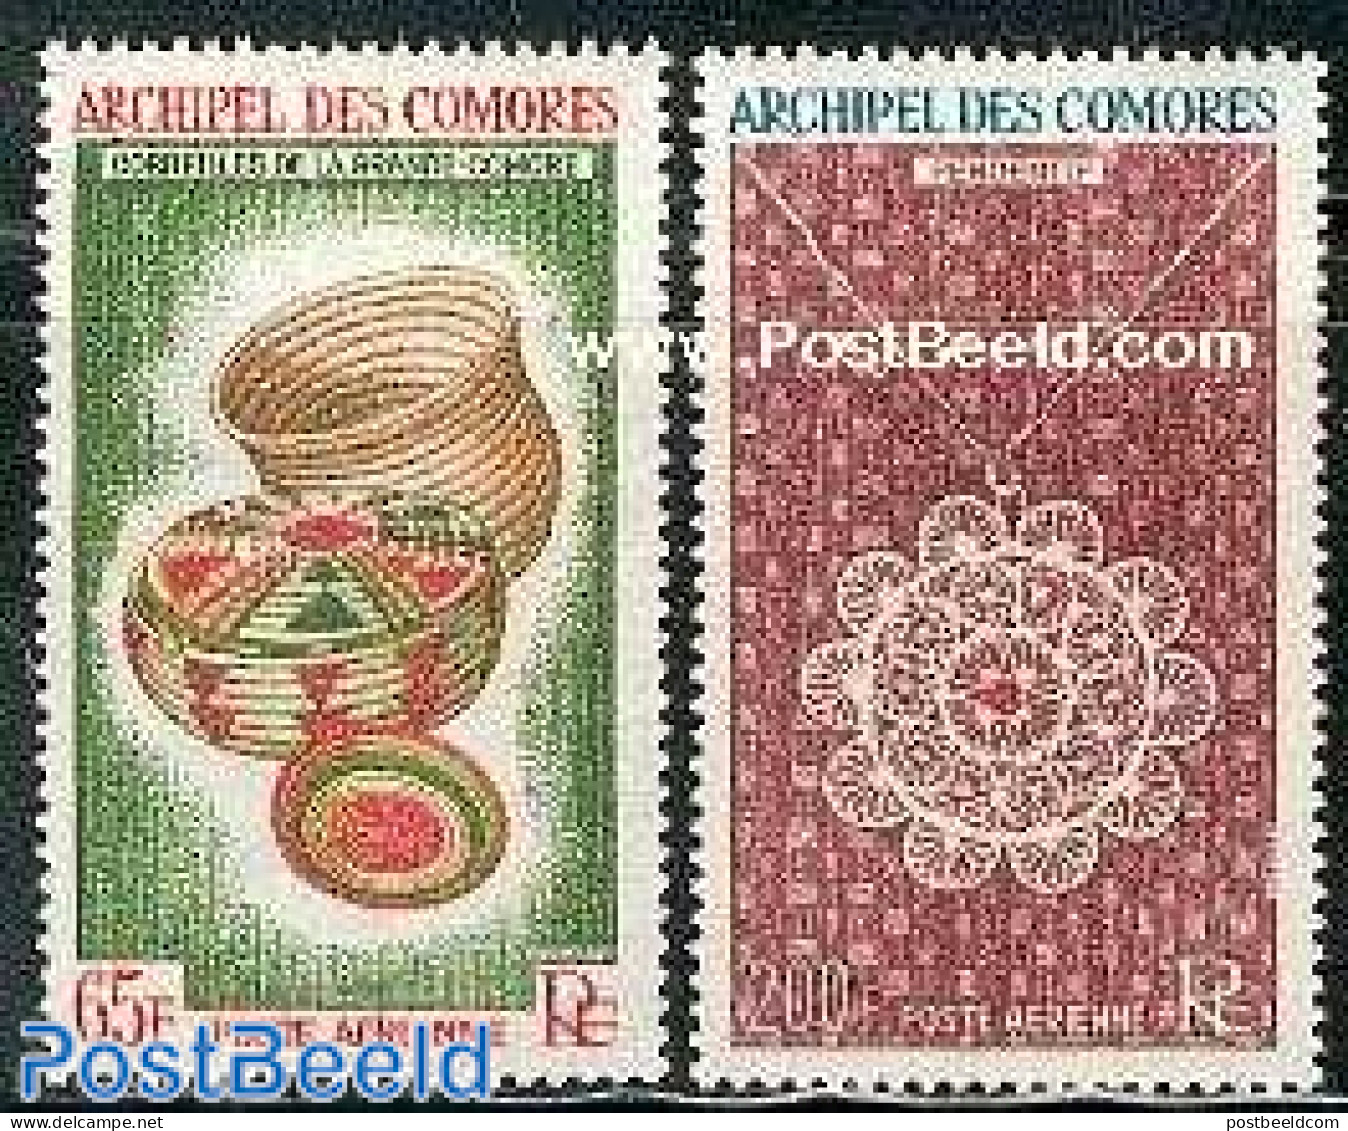 Comoros 1963 Handicrafts 2v, Mint NH, Art - Handicrafts - Comoros